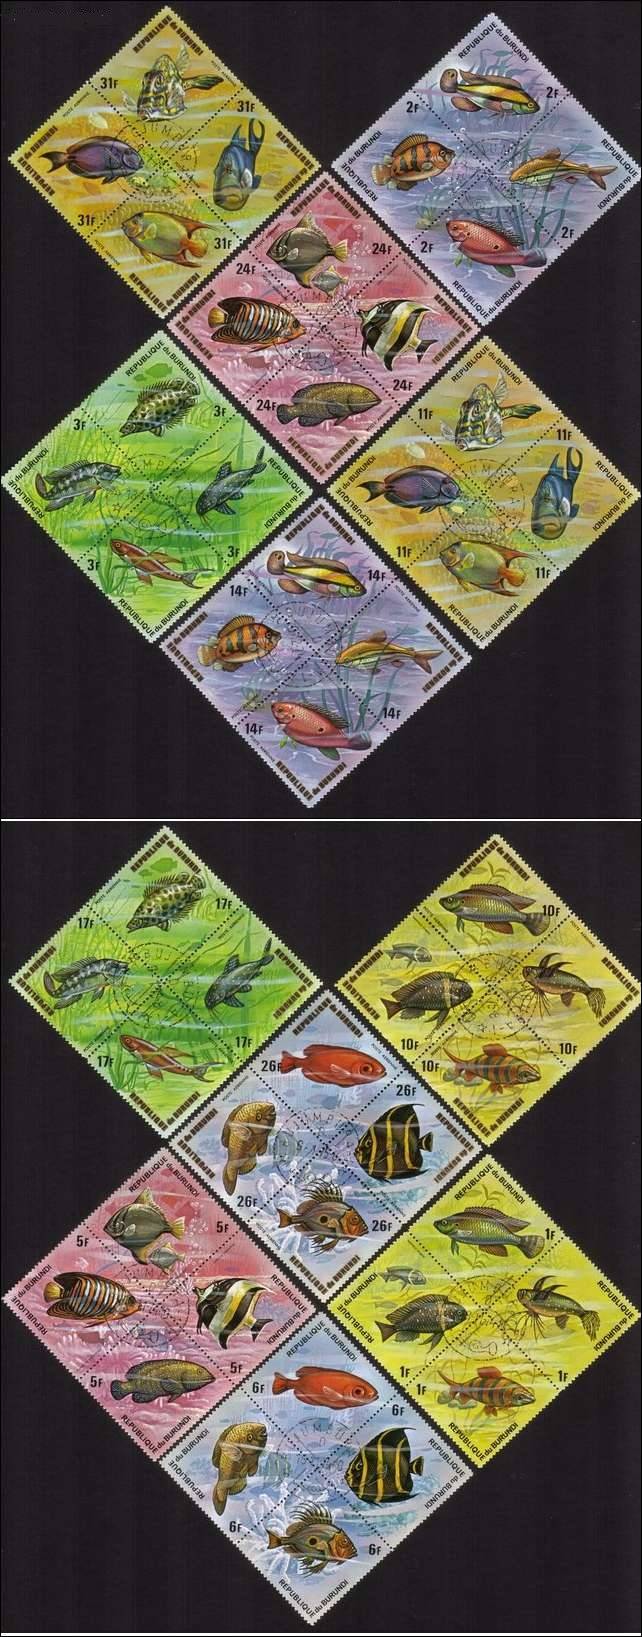 Fish: Pantodon Buchholzi, Tropheus Duboisi, Etc. - Complete Set of 48 Different (Diamond Shaped)